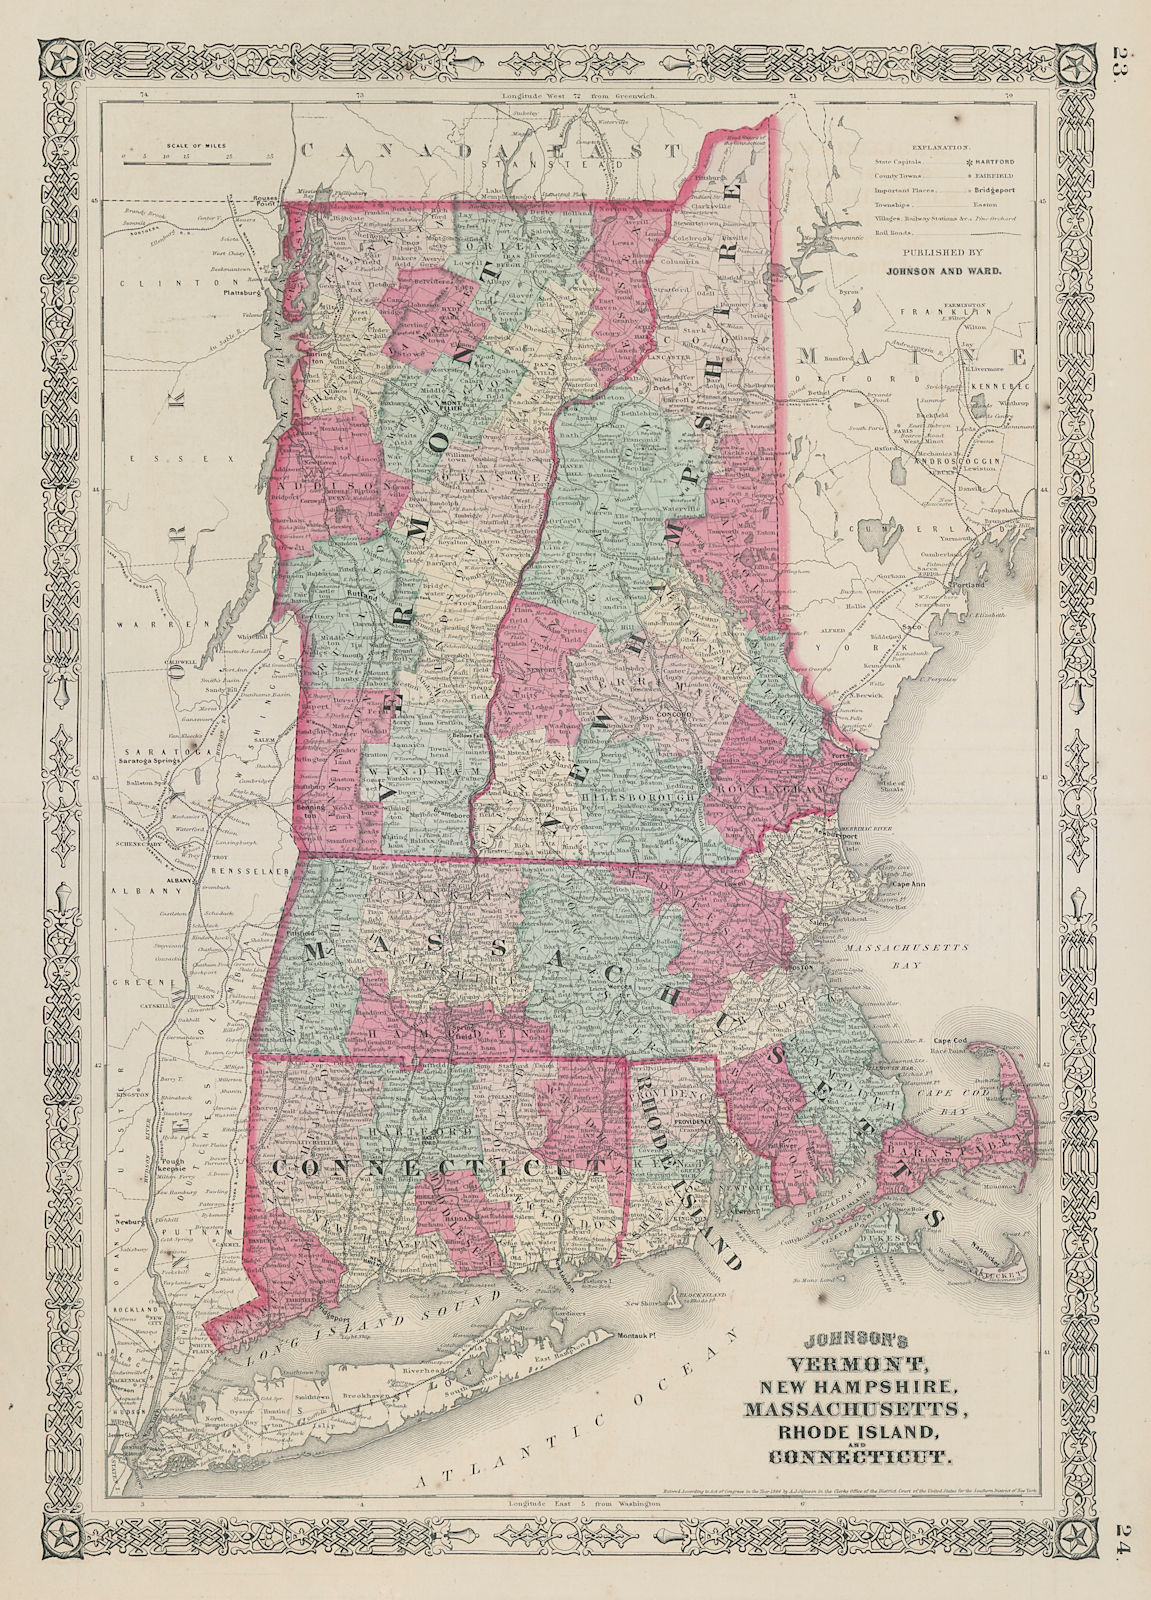 Johnson's Vermont New Hampshire Massachusetts Rhode Island Connecticut 1865 map